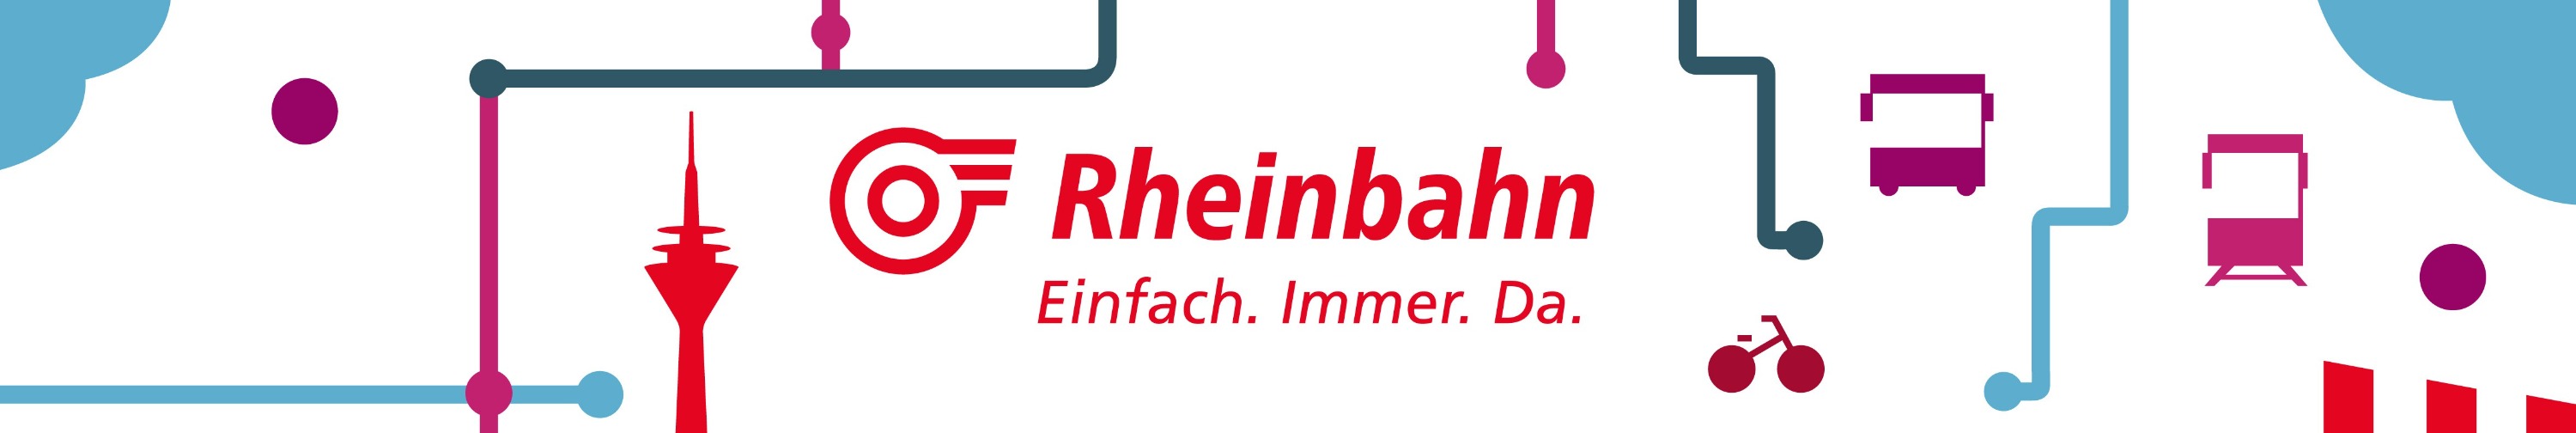 Rheinbahn AG background